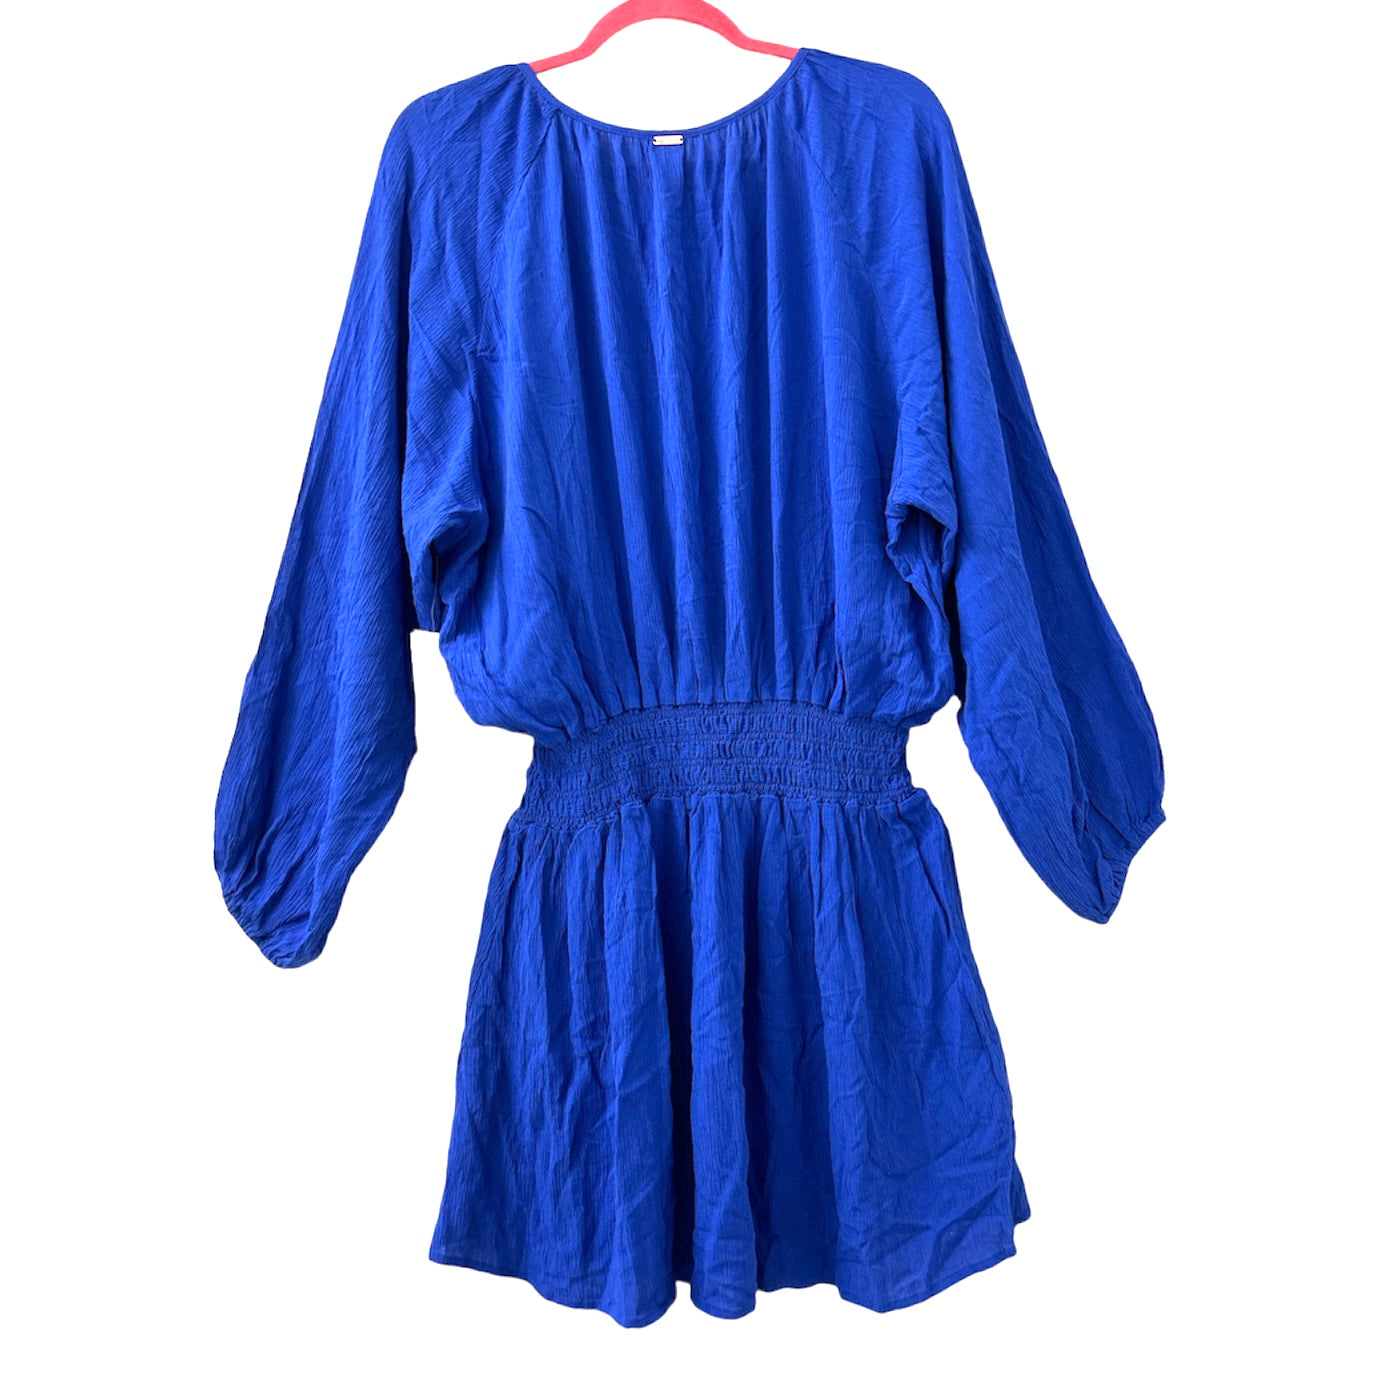 MAUI Dress Blue Long Sleeve Size M Women's Cover Up